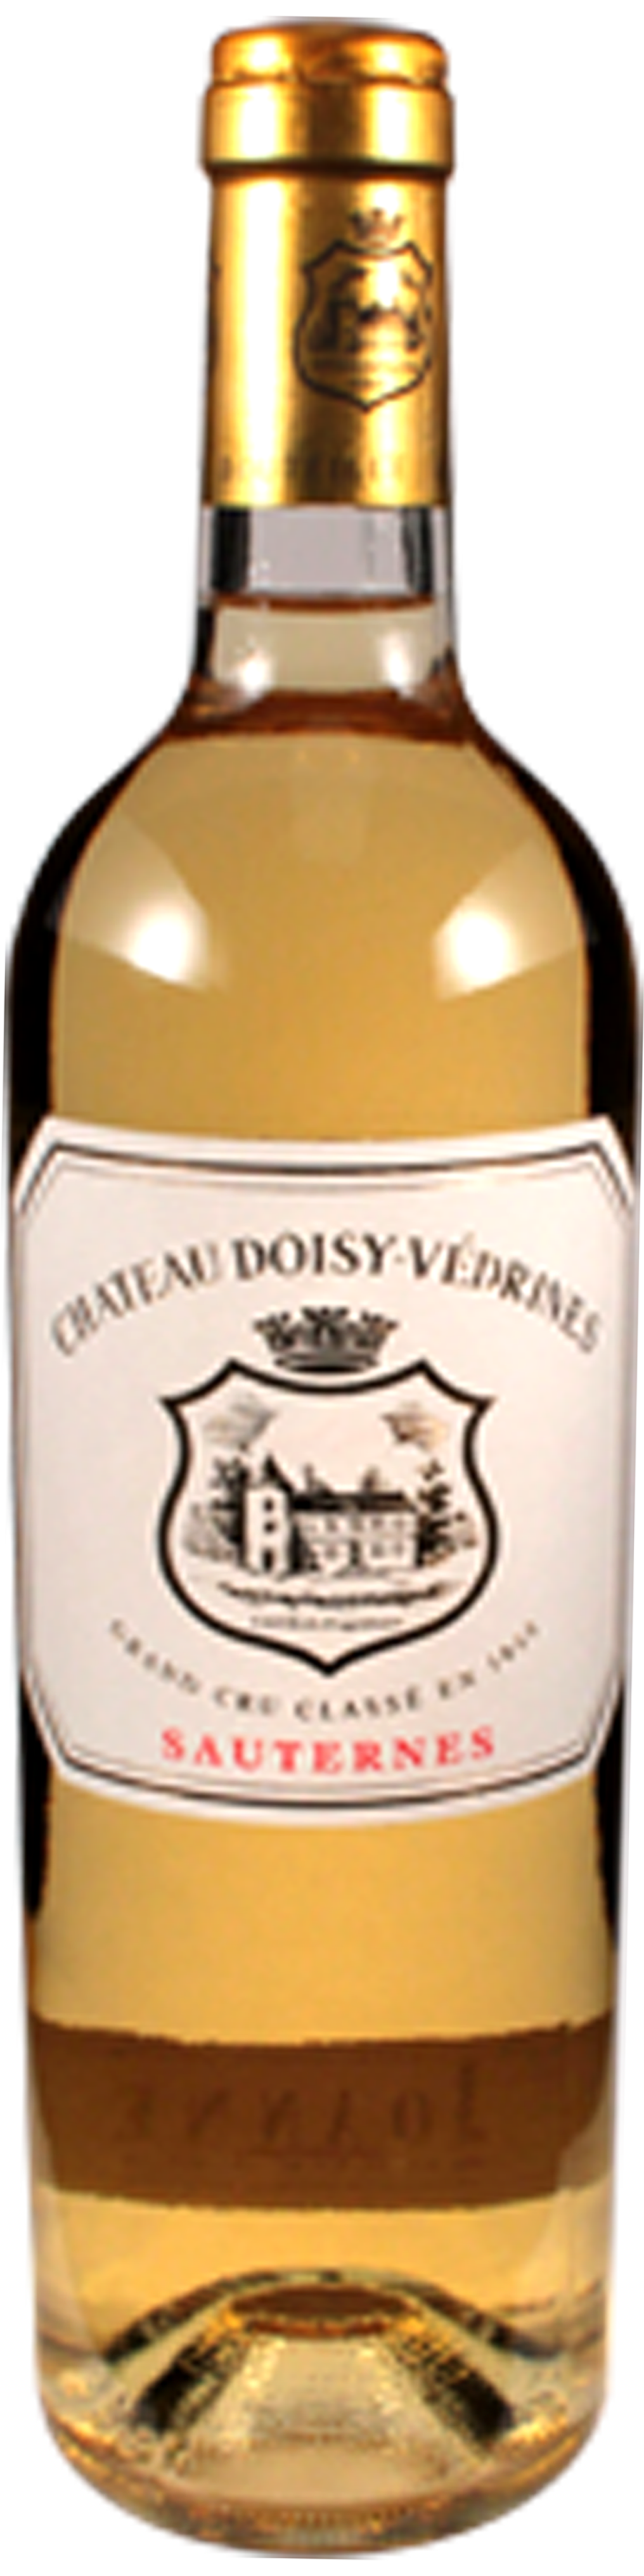 Bottle shot of 2009 Château Doisy Védrines, 2ème Cru Barsac